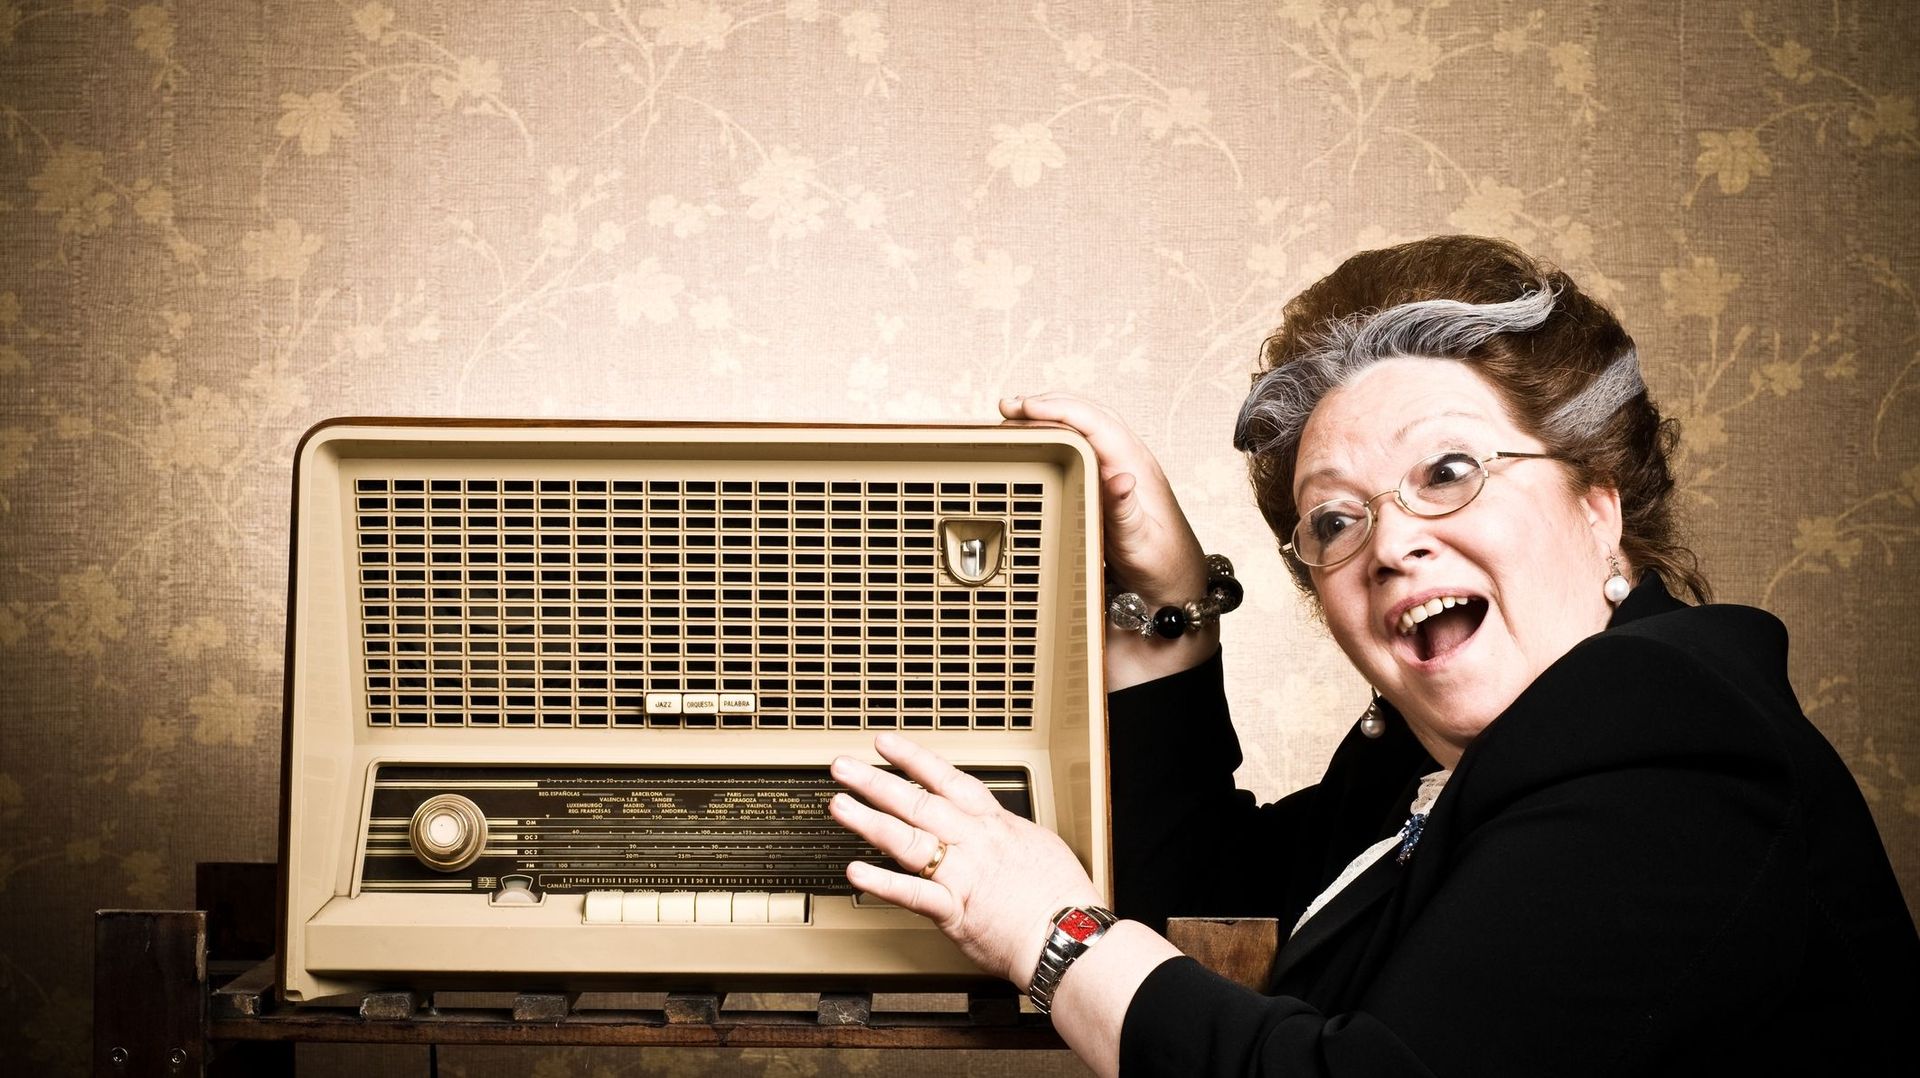 Старое радио послушаем. Прослушивание радио. Человек радио. Радио фото. Слушать радио.